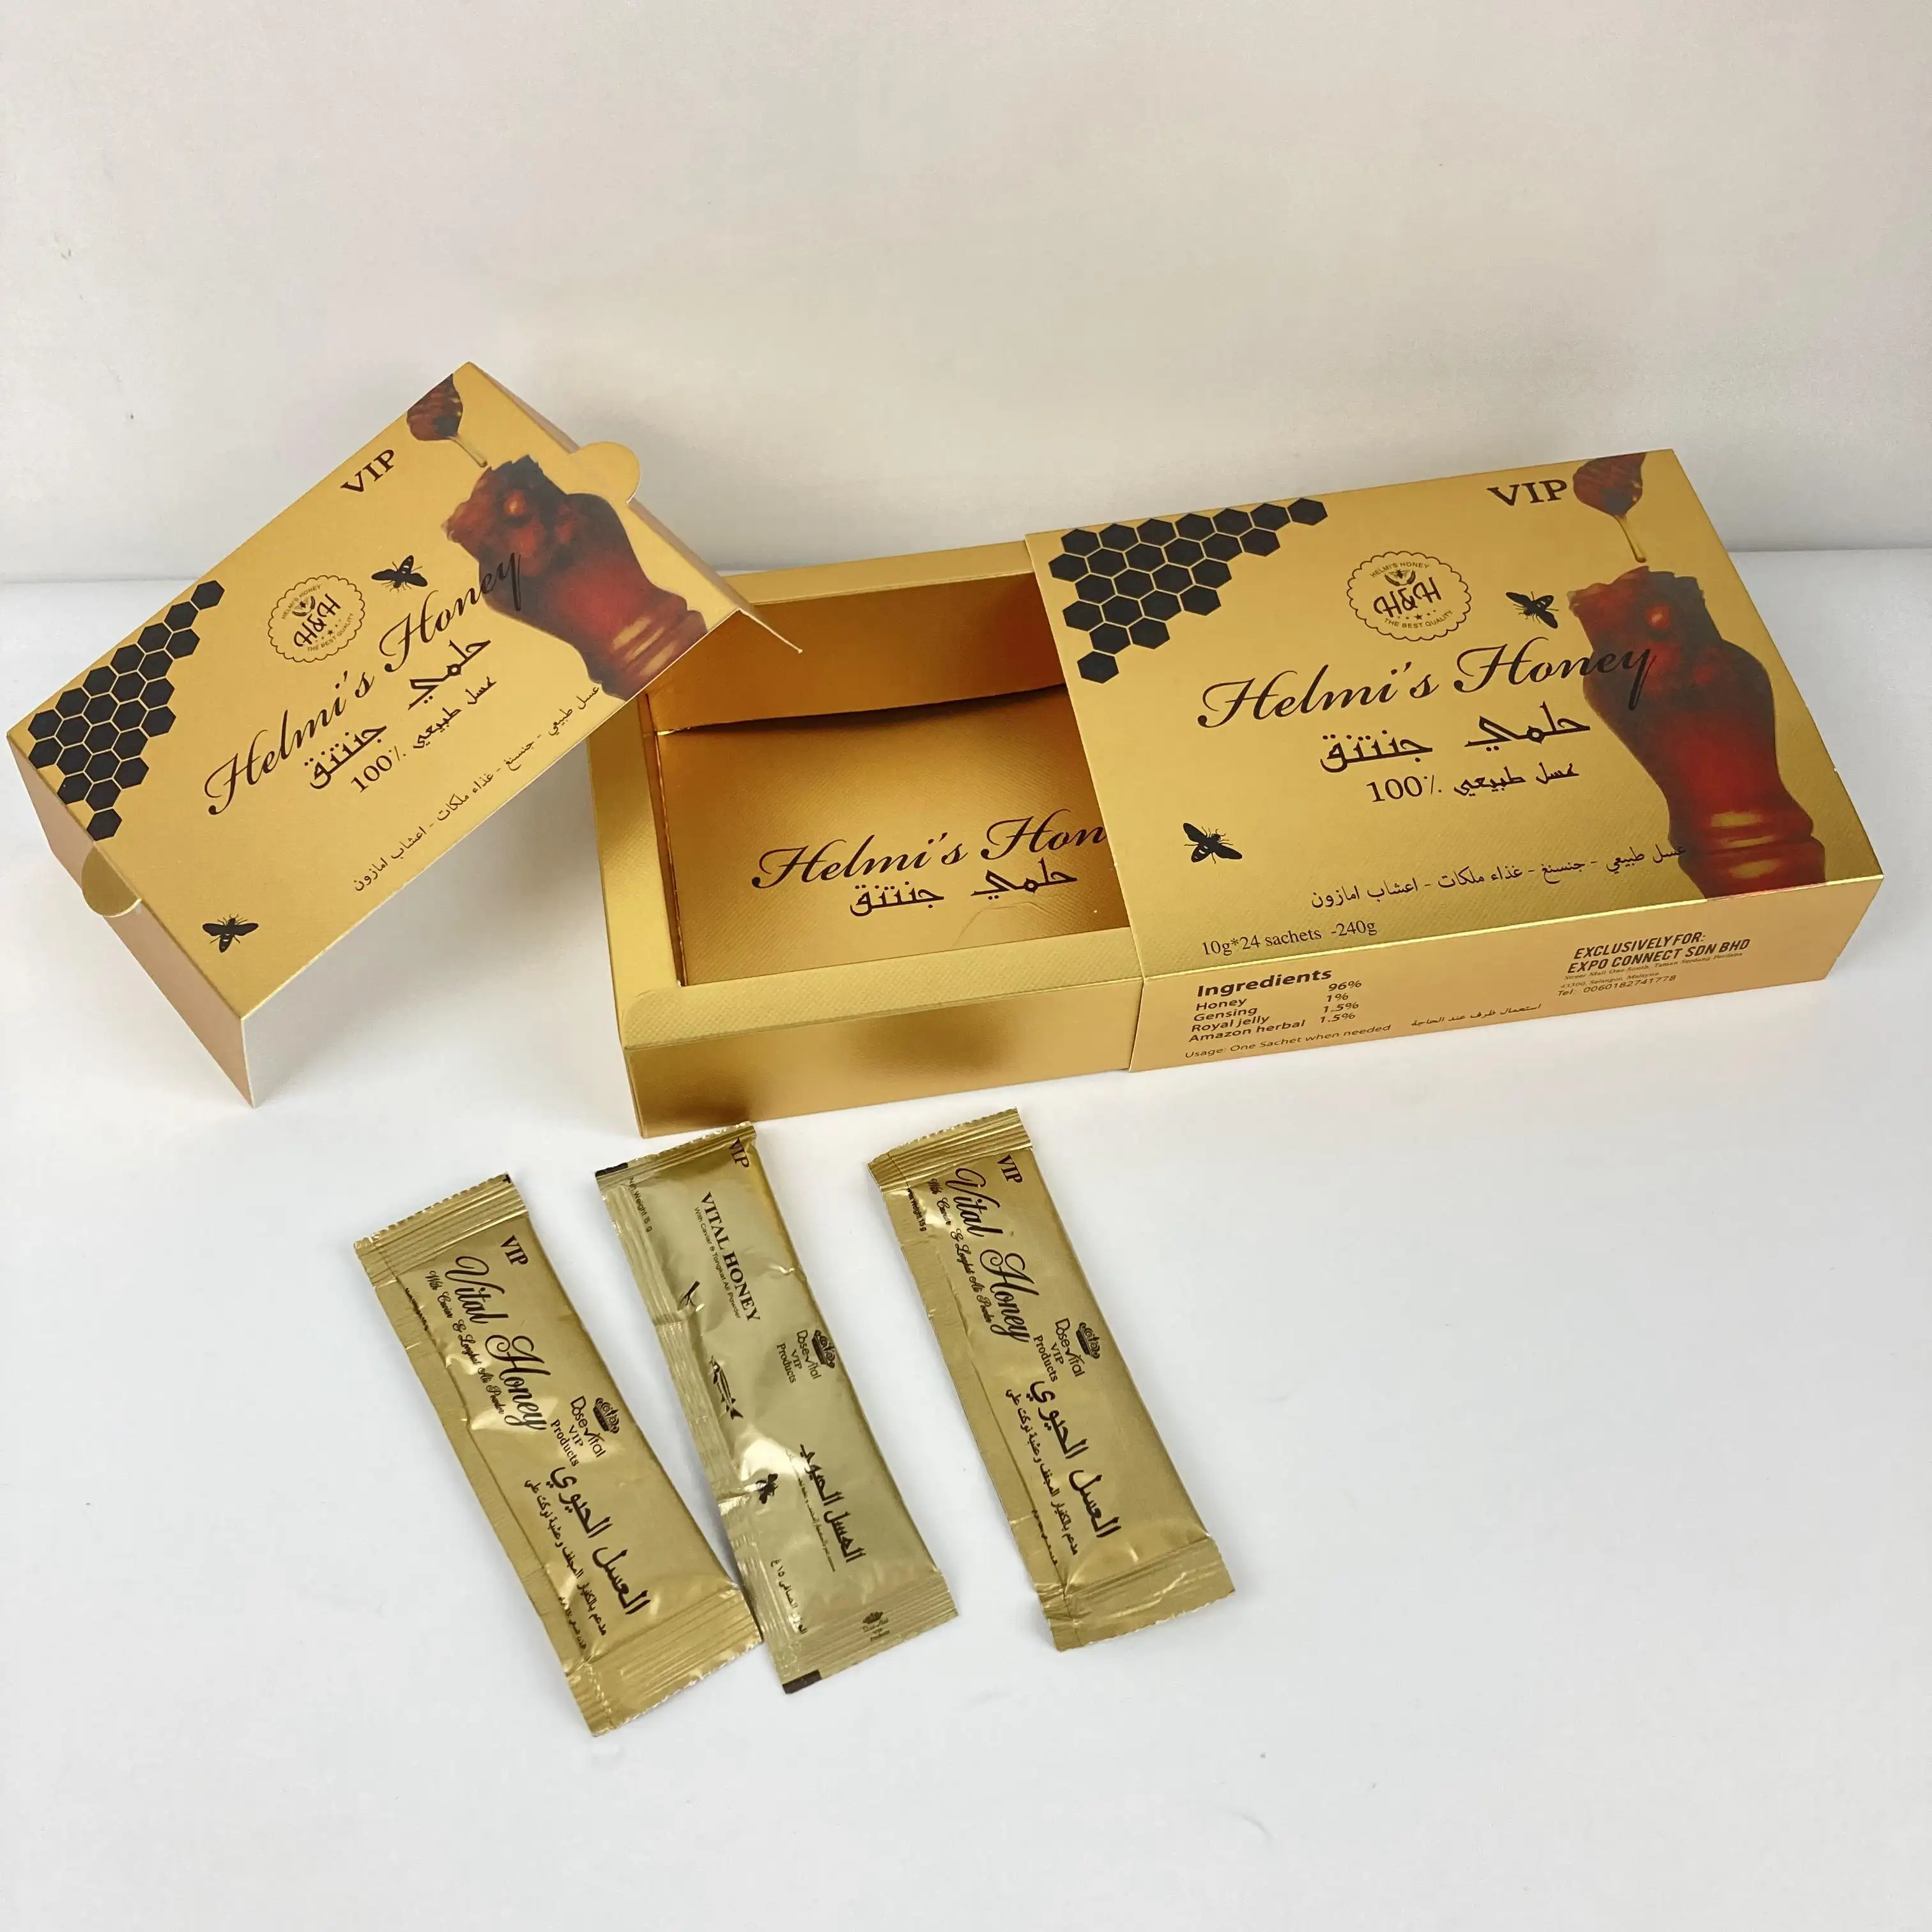 Sachetes de embalagem personalizada de ouro, embalagens de mel vip, estampa de flores hmf royal honey vip para ele vital vip